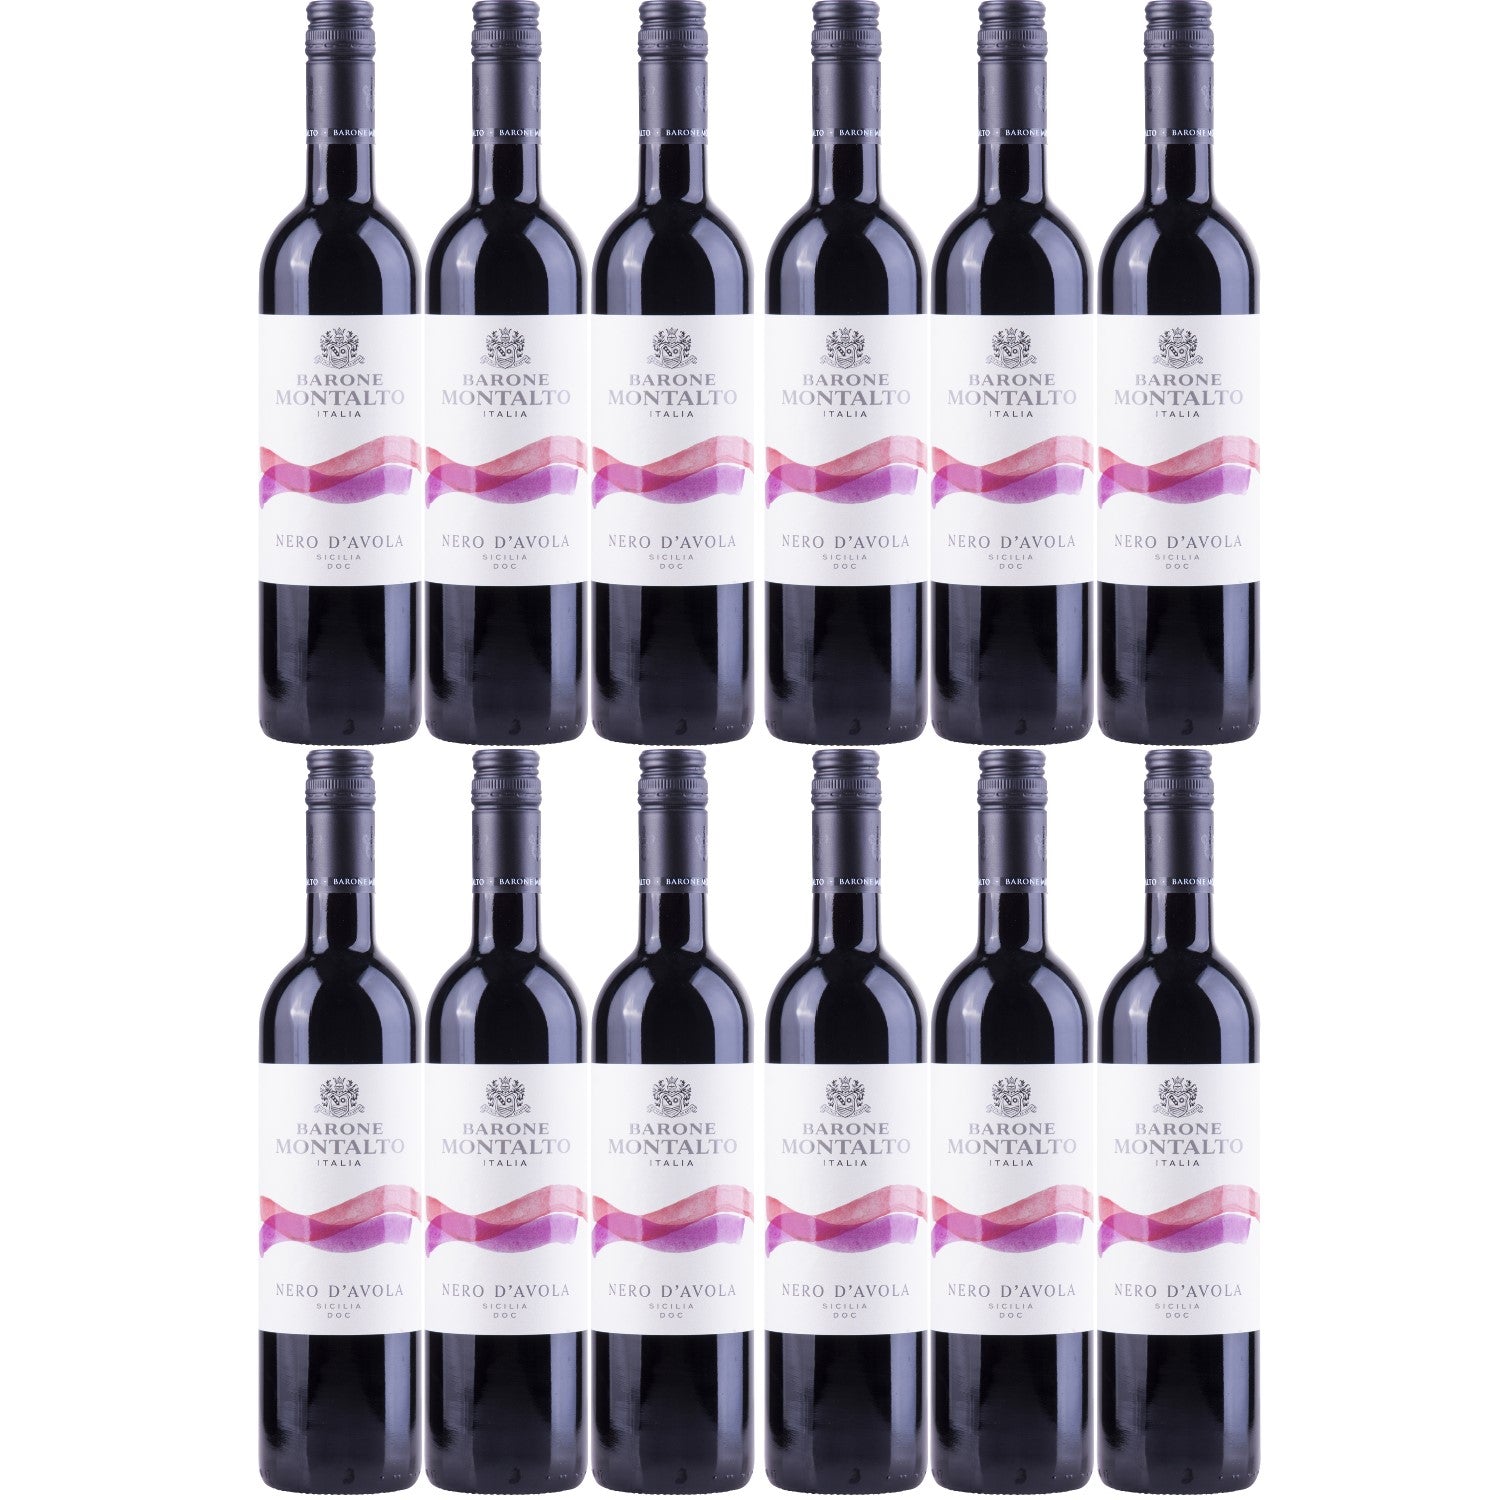 Barone Montalto Nero D'Avola Sicilia Rotwein Wein Trocken IGT Italien (12 x 0,75l) - Versanel -